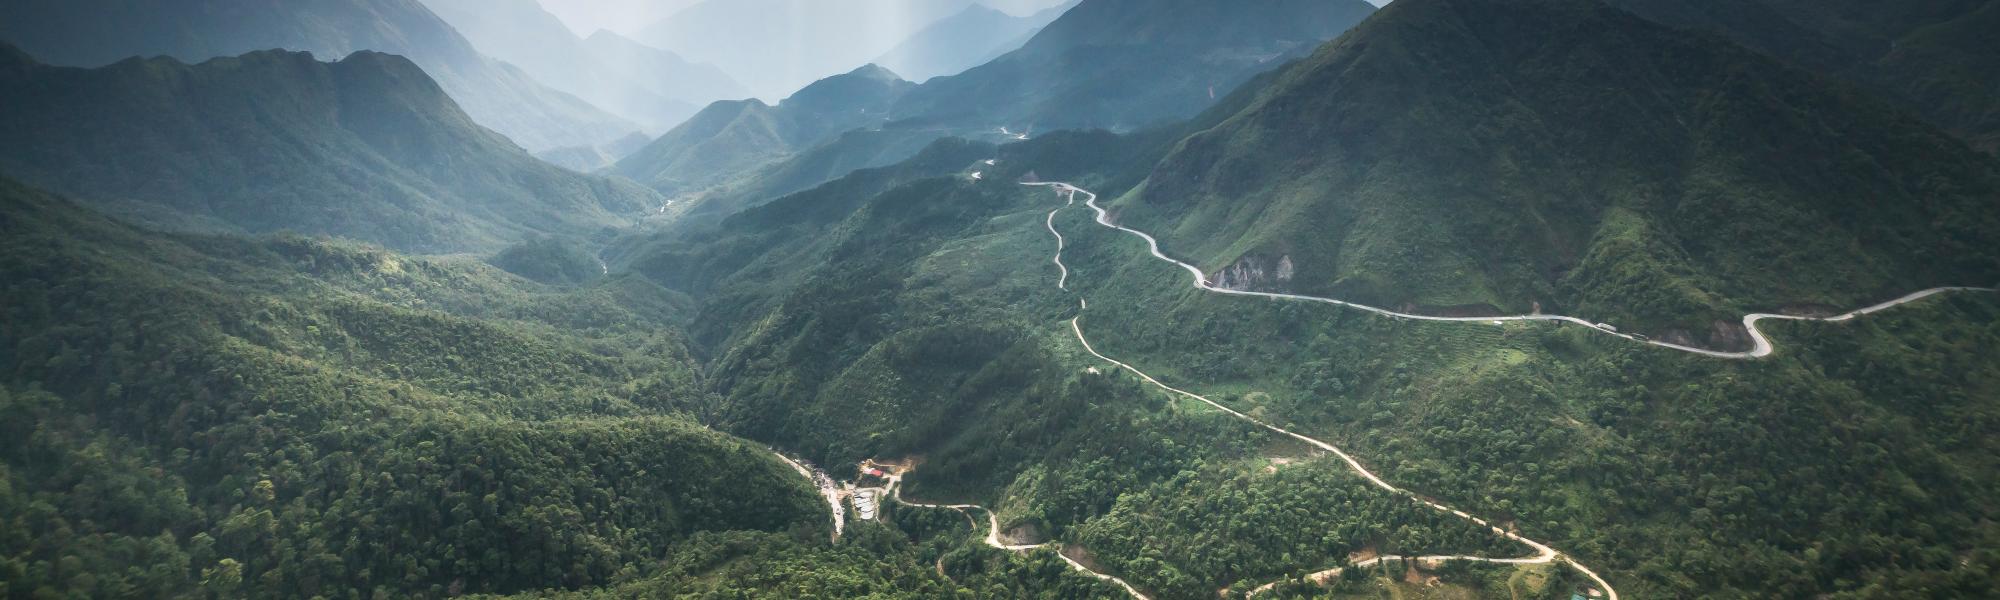 vietnam mountains roads